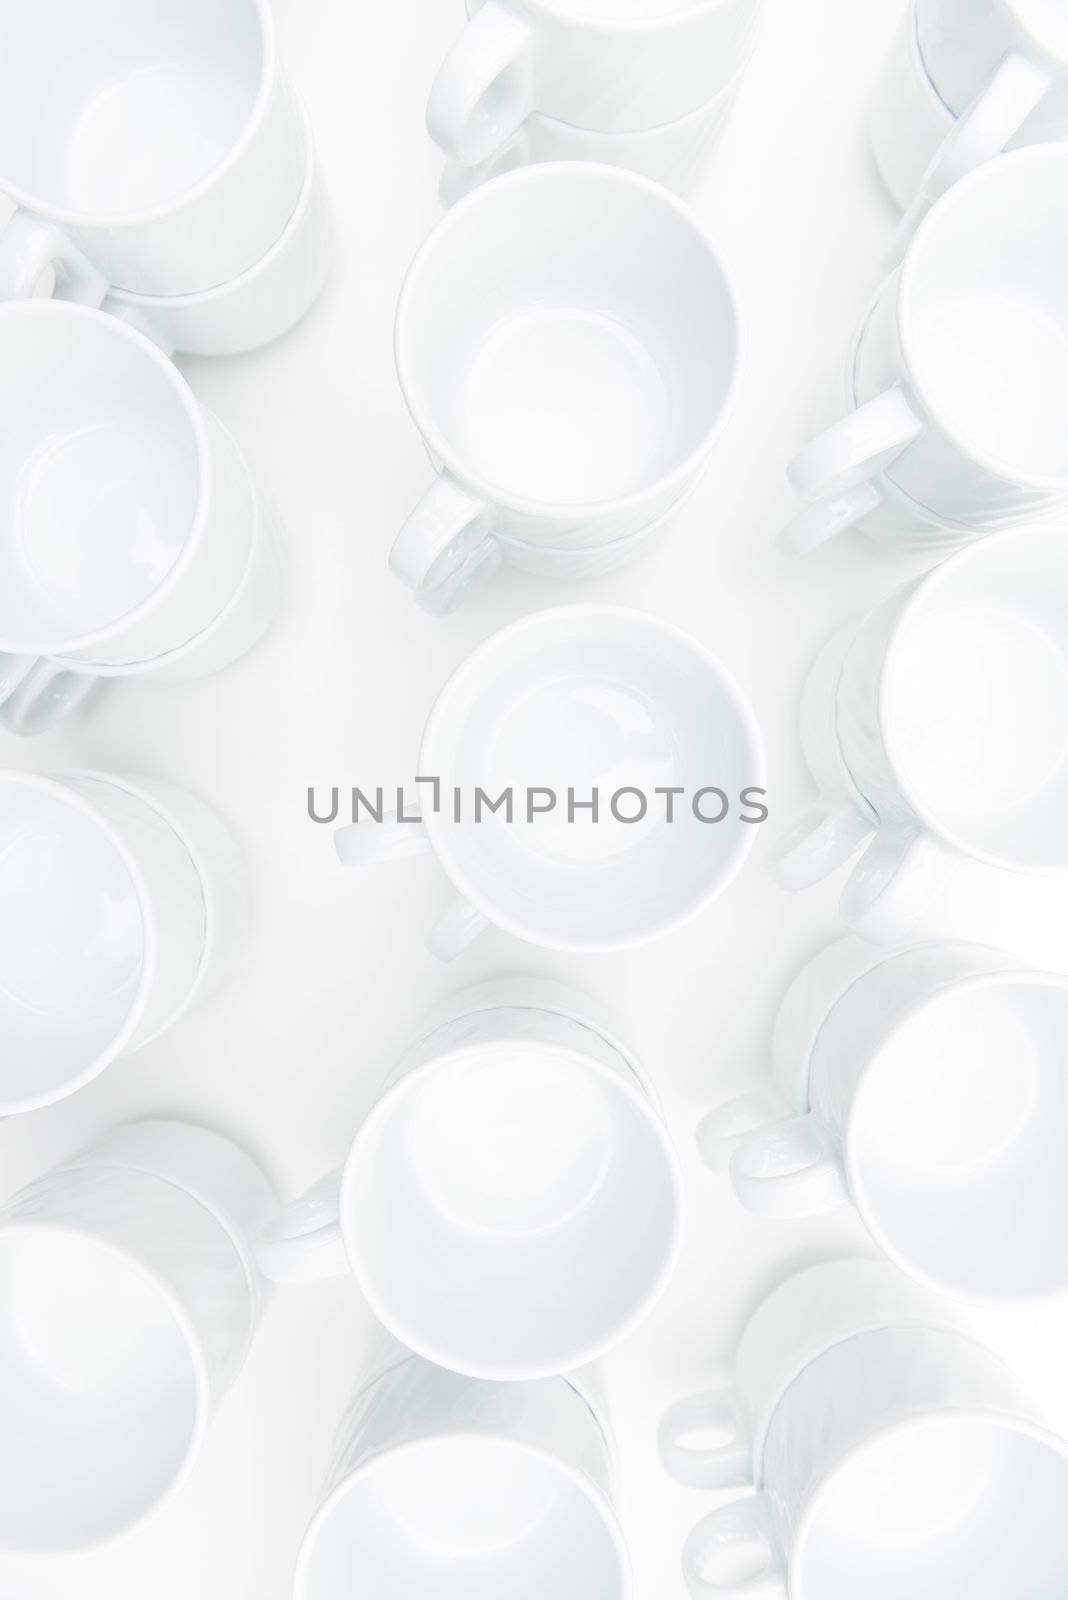 White Coffee Cups by Rainman